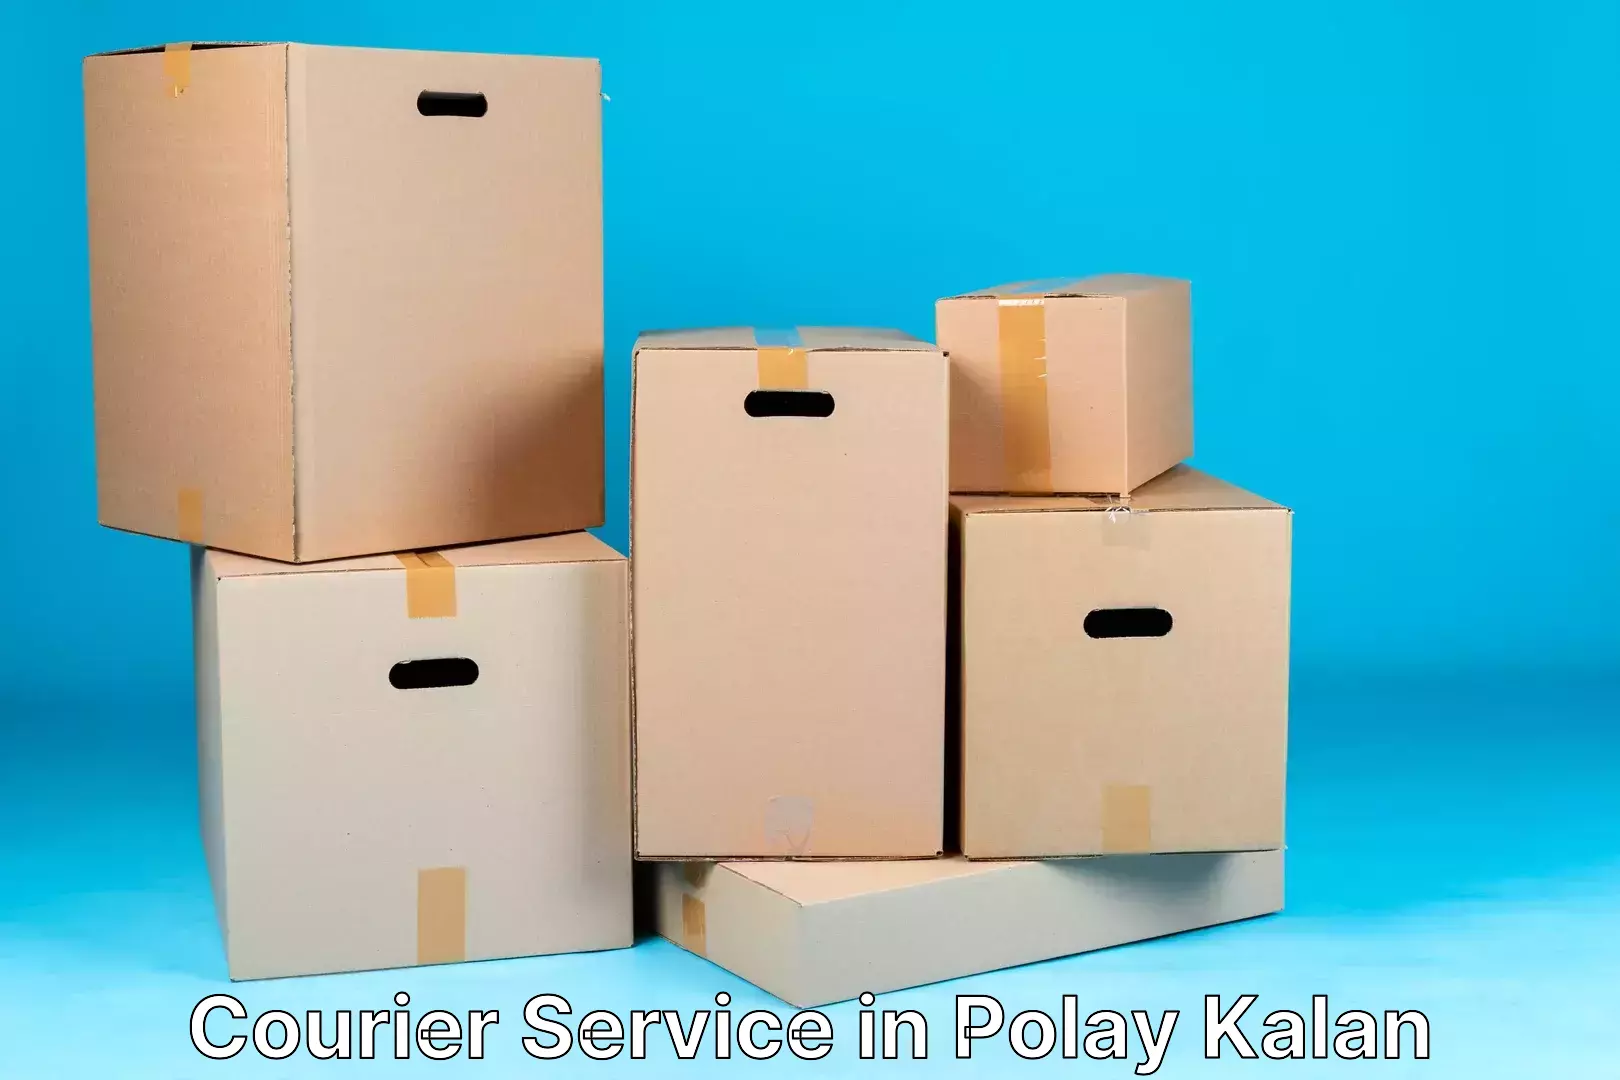 High-speed parcel service in Polay Kalan